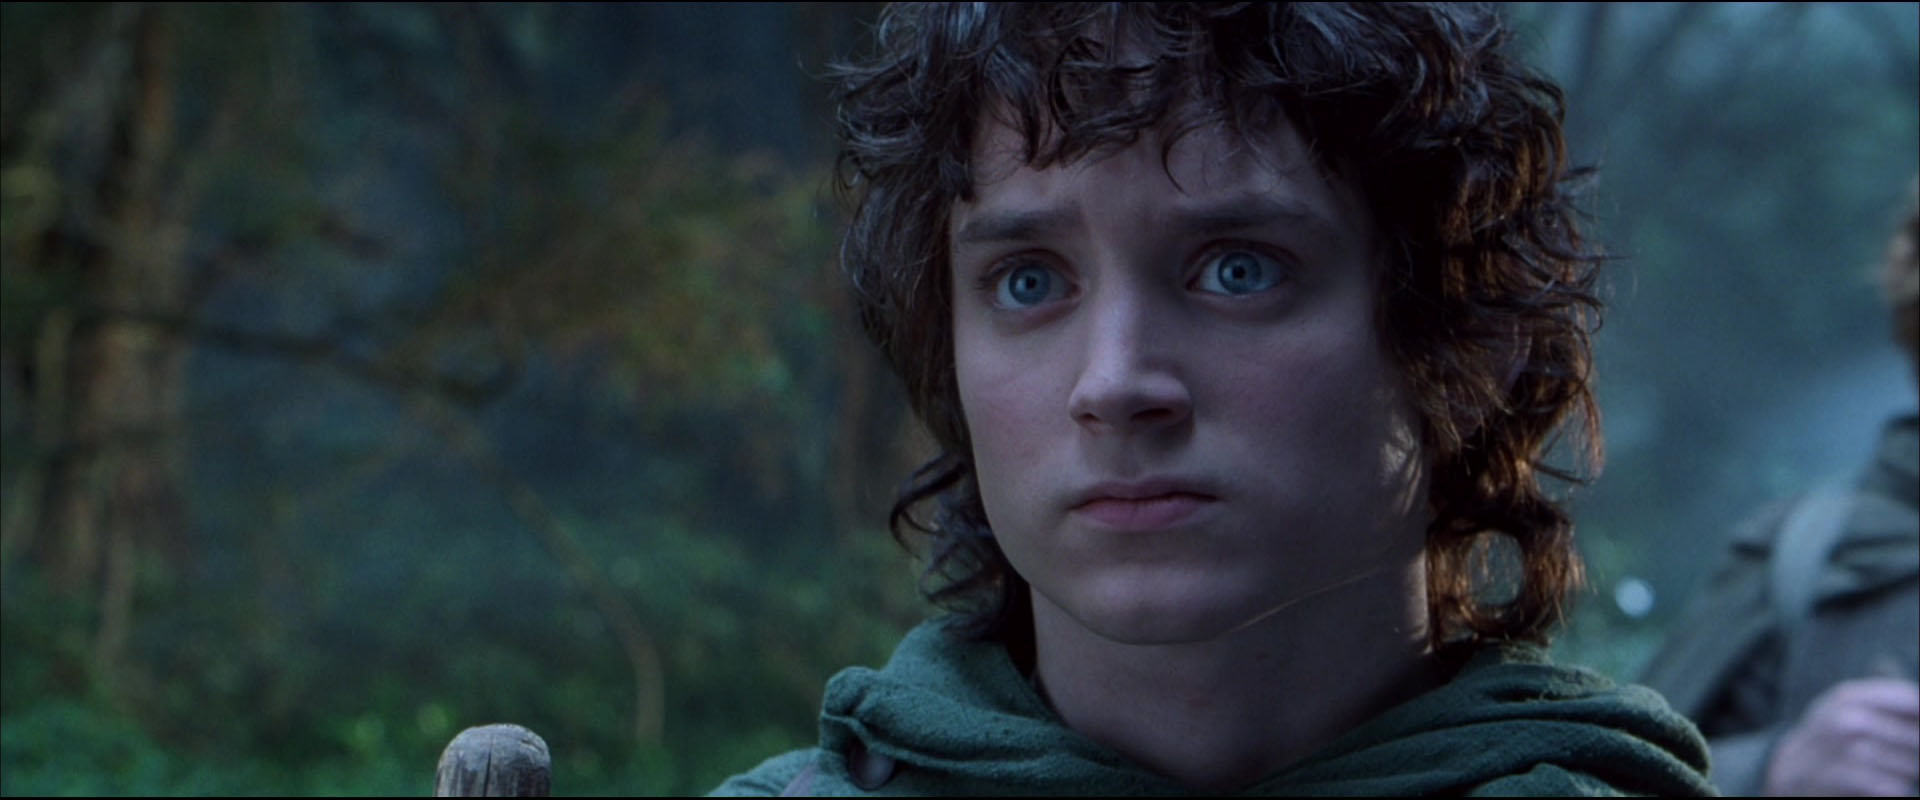 Принц из властелина колец. Элайджа Вуд Фродо. Хоббит Фродо Бэггинс. Властелин колец братство кольца Фродо. Хоббиты Фродо 4.